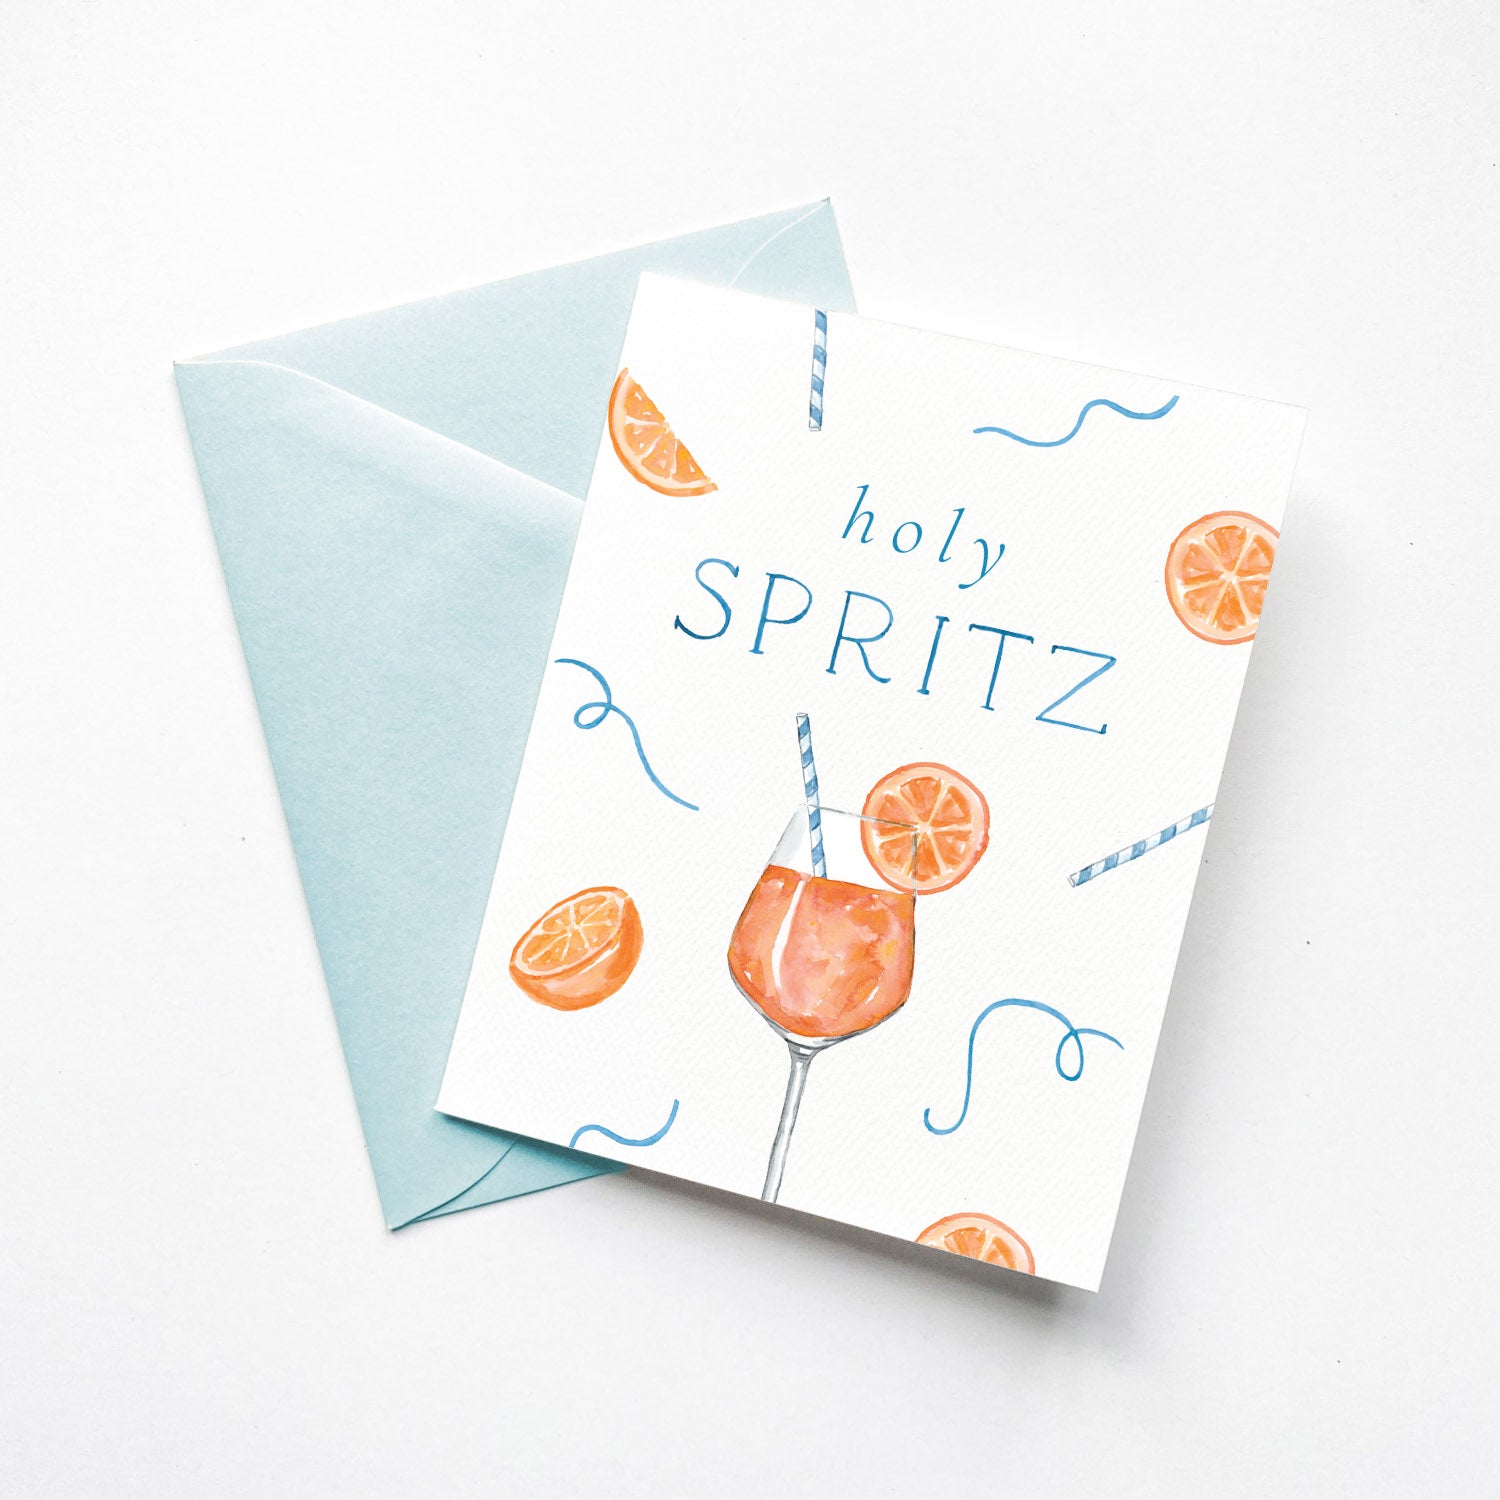 Holy Spritz Aperol Card